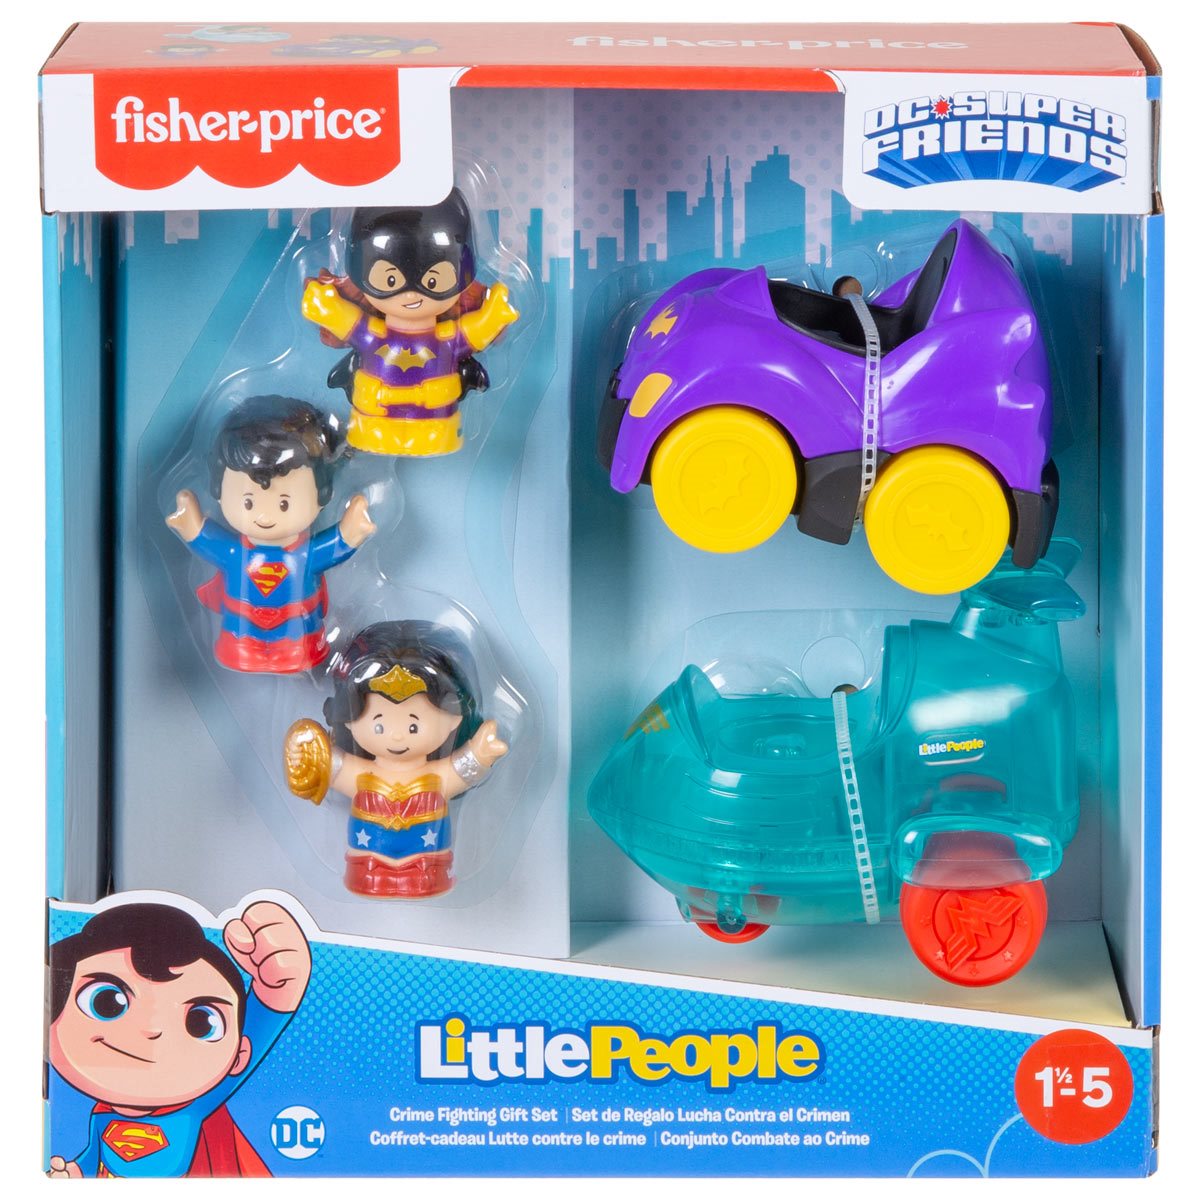 Fisher Price Little People BATGIRL Bat Girl DC Comics Gift Toy 